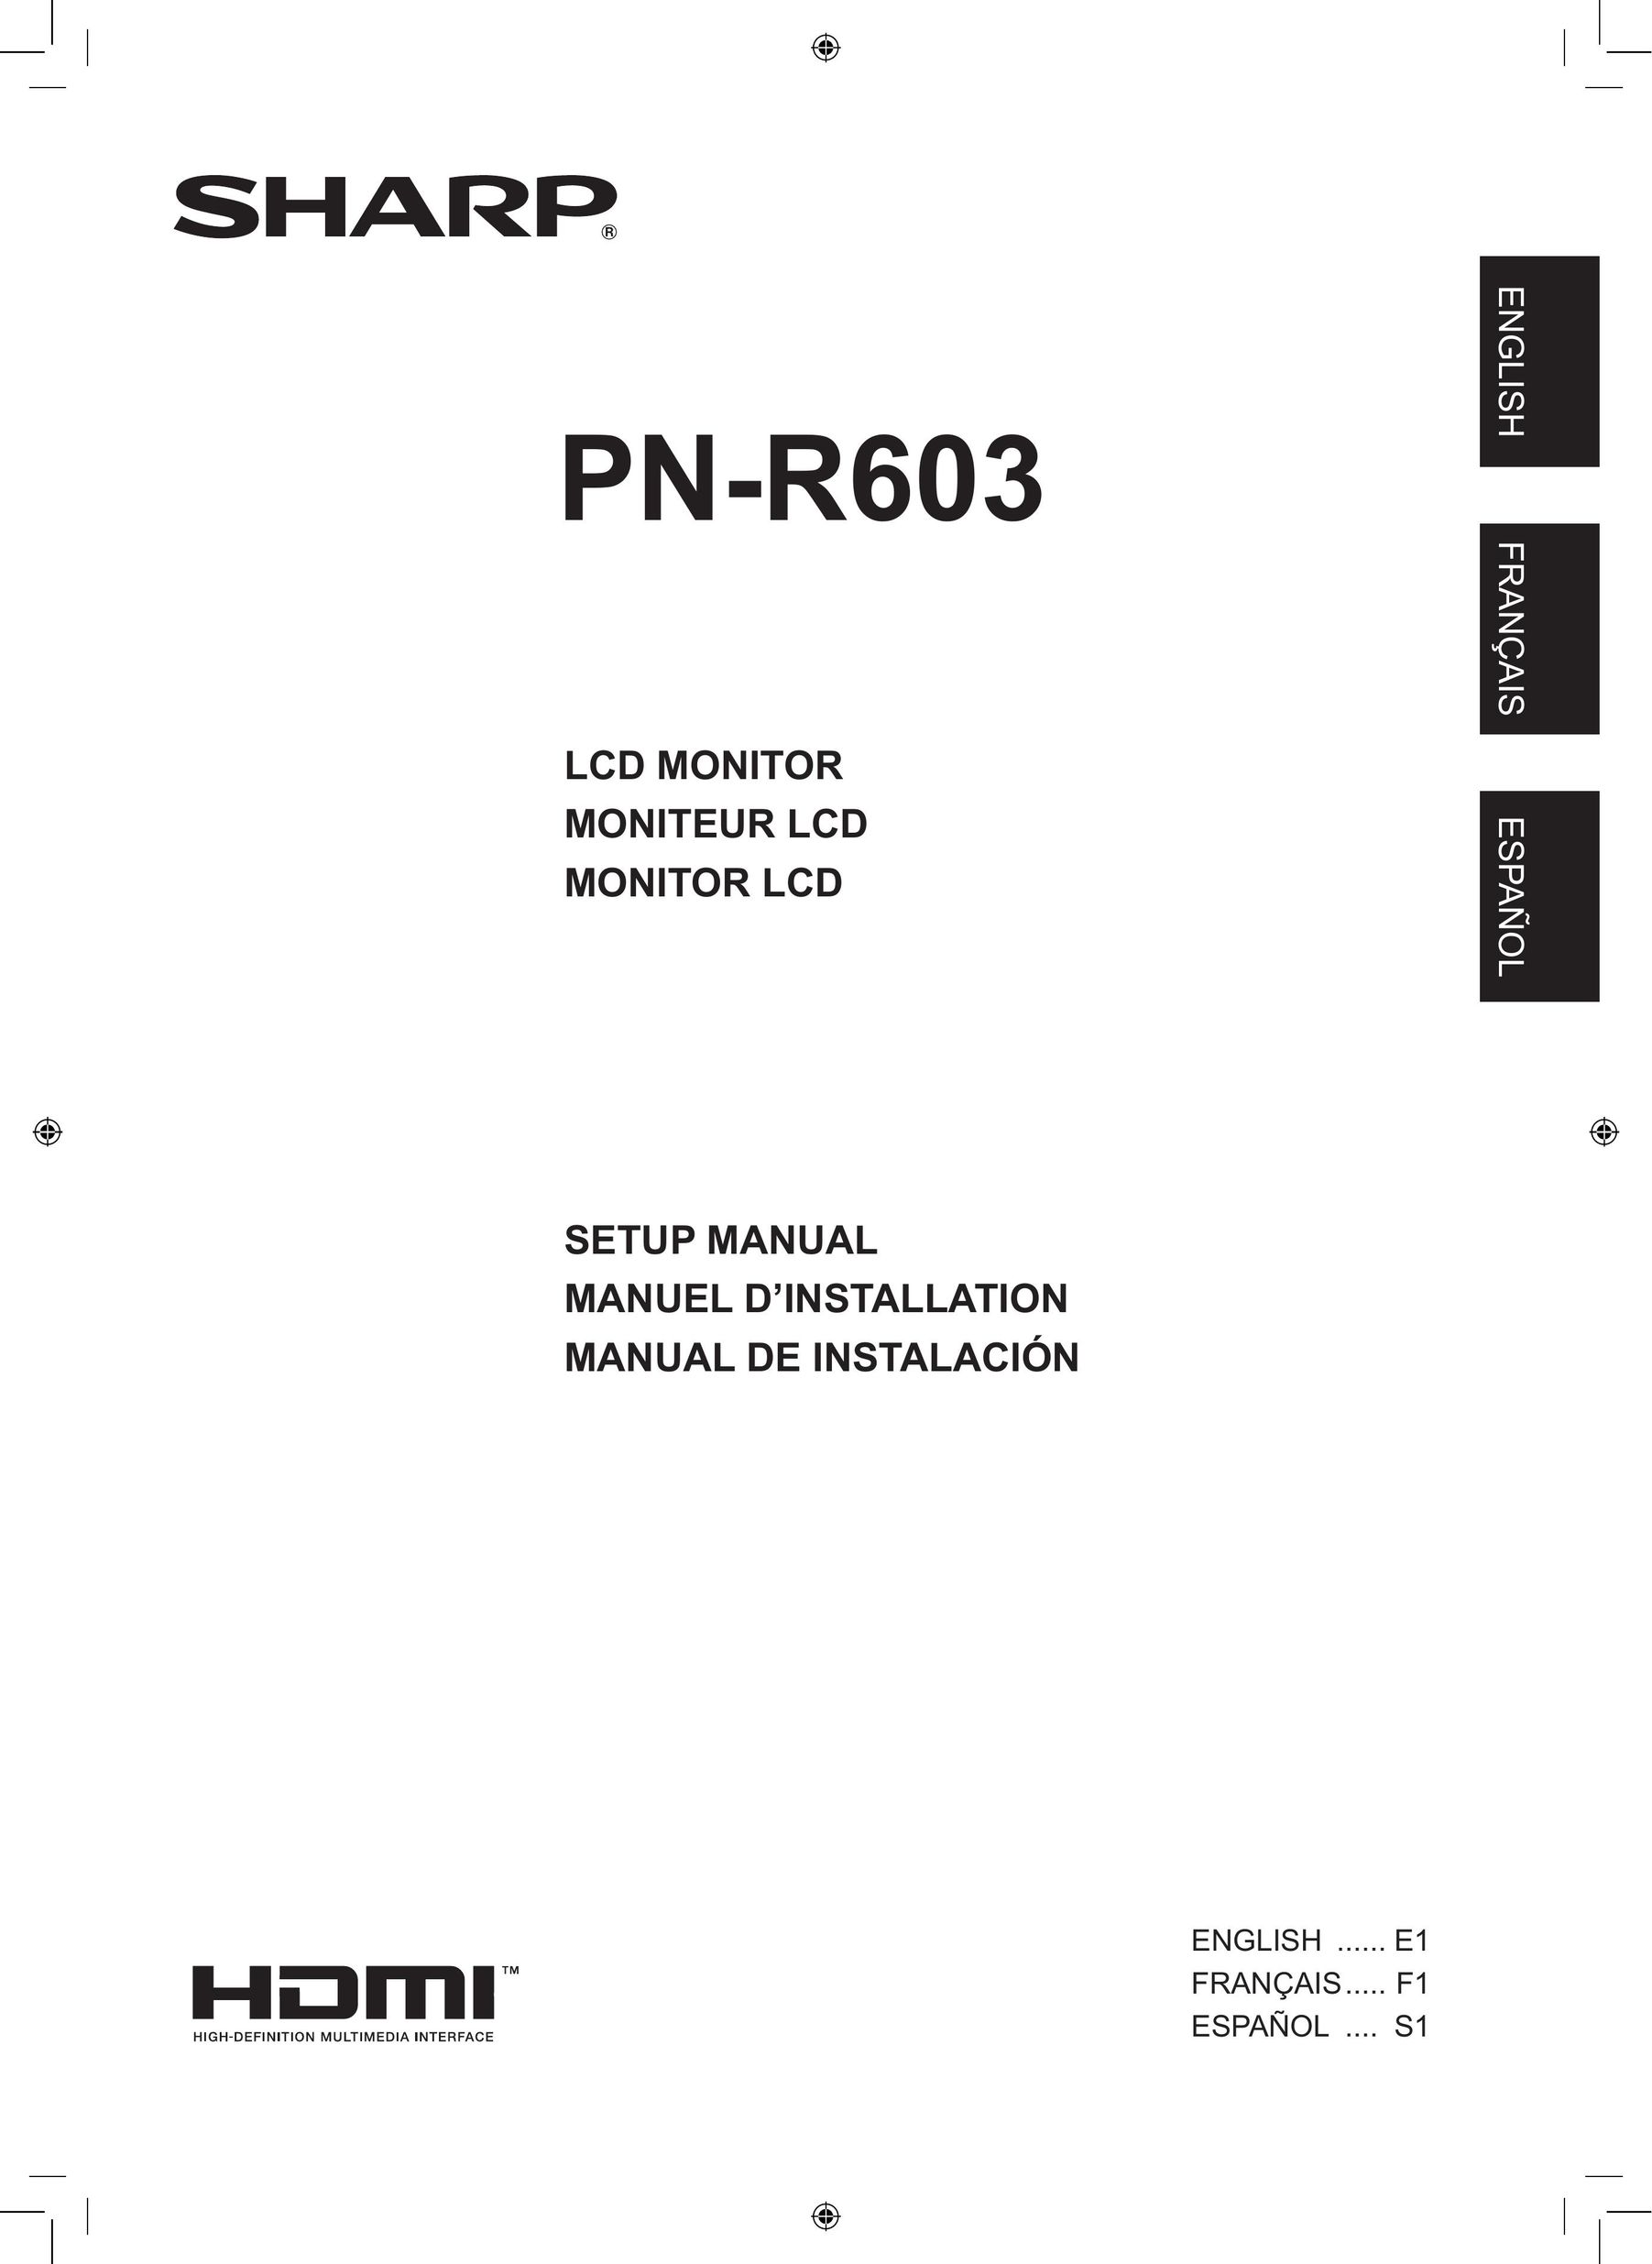 Sharp PN-R603 Computer Monitor User Manual